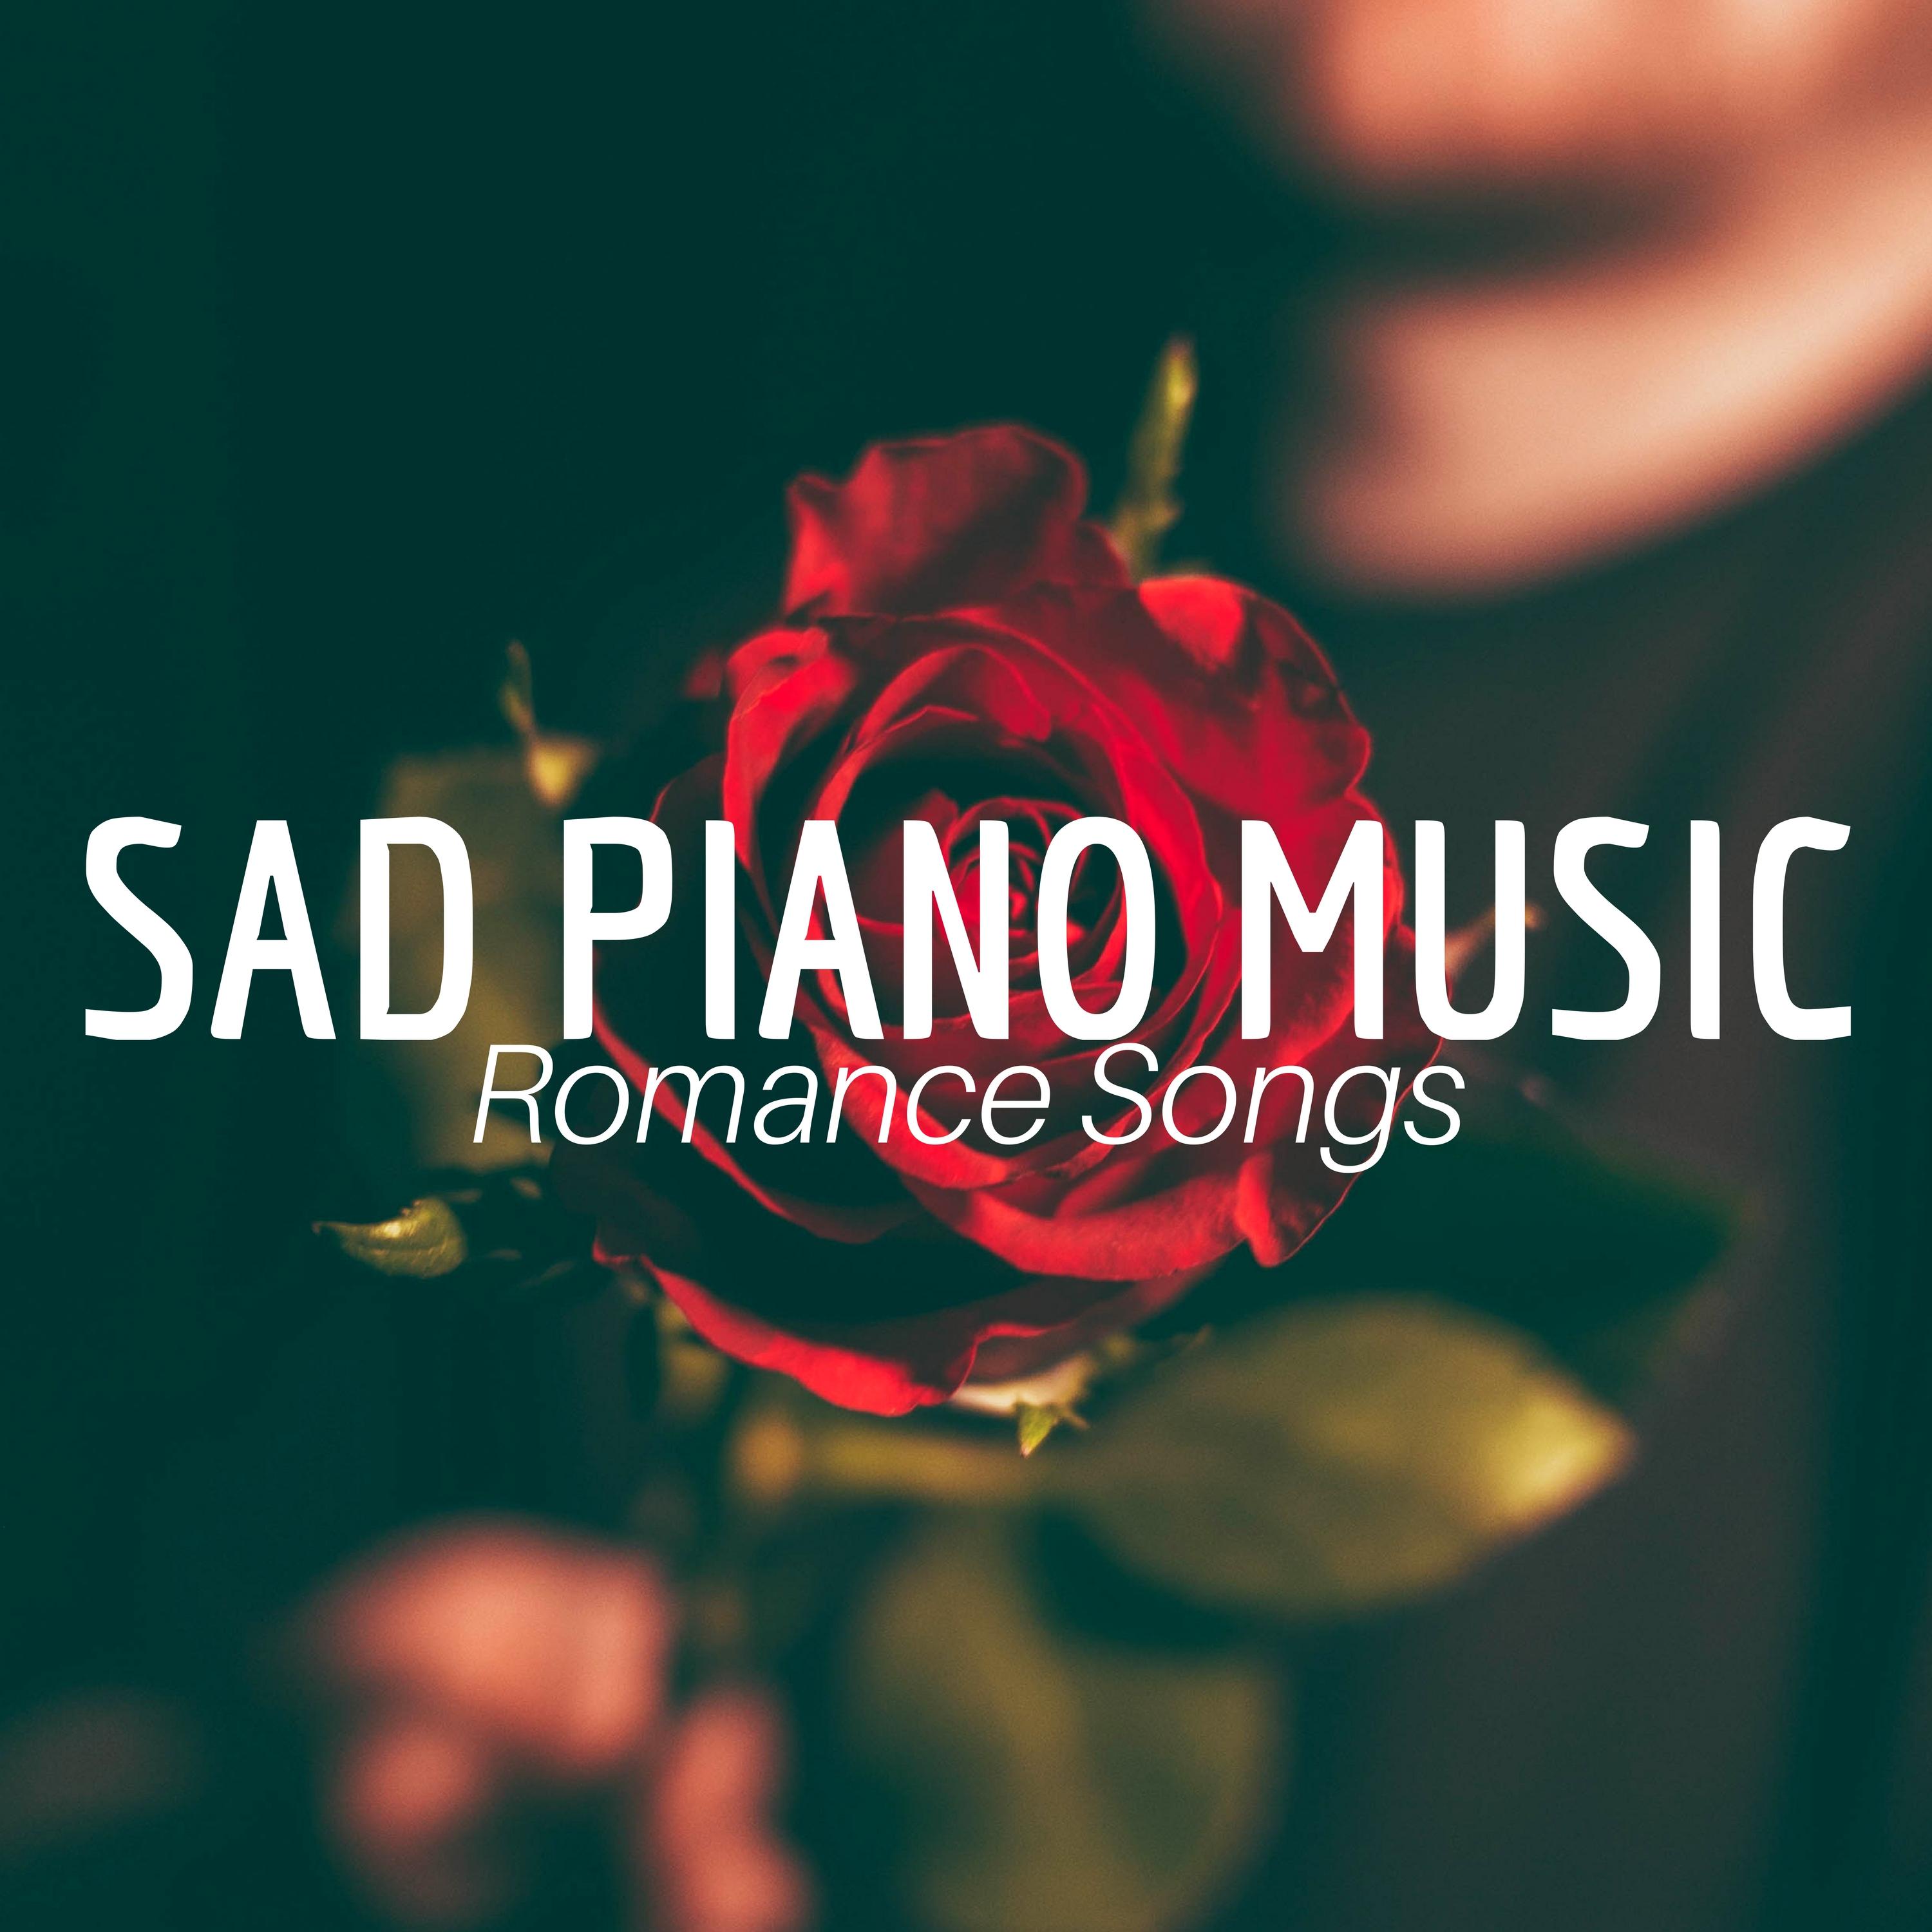 Sad Piano Music - Romance Songs